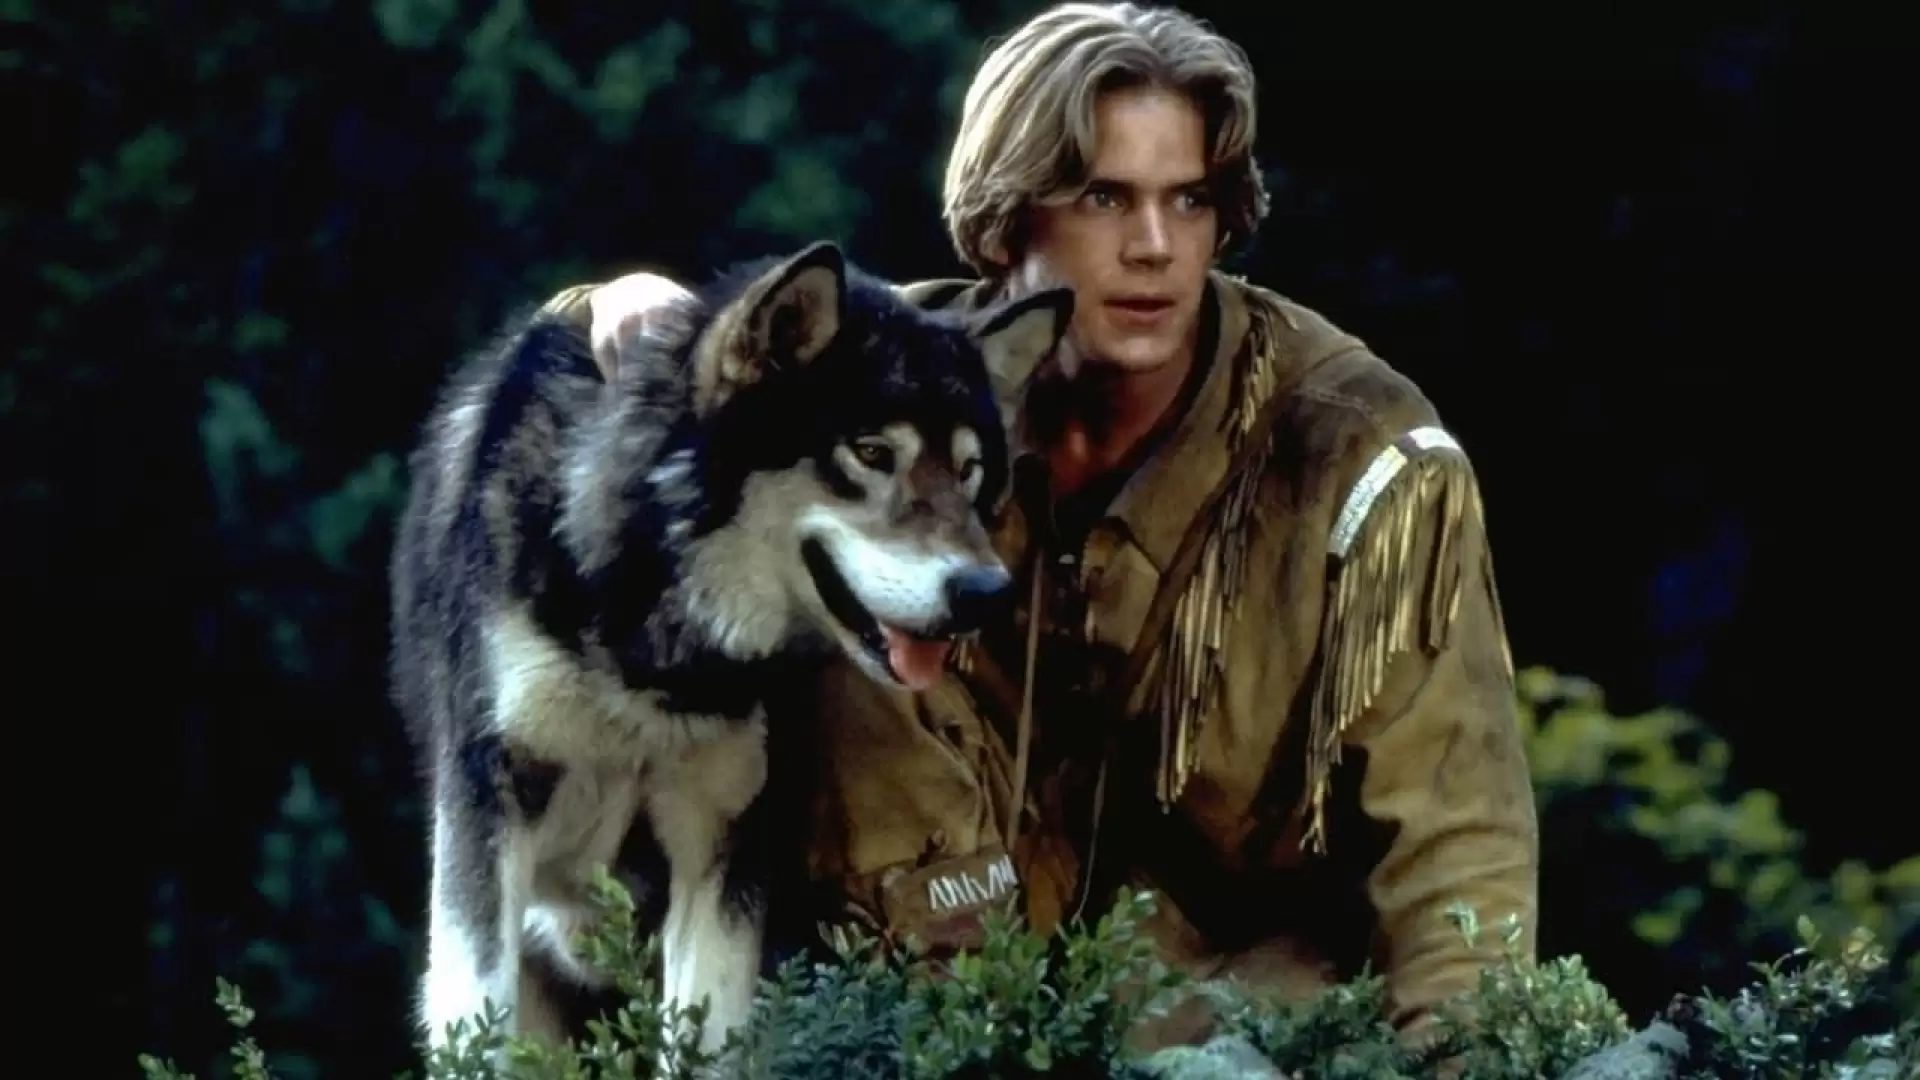 دانلود فیلم White Fang 2: Myth of the White Wolf 1994